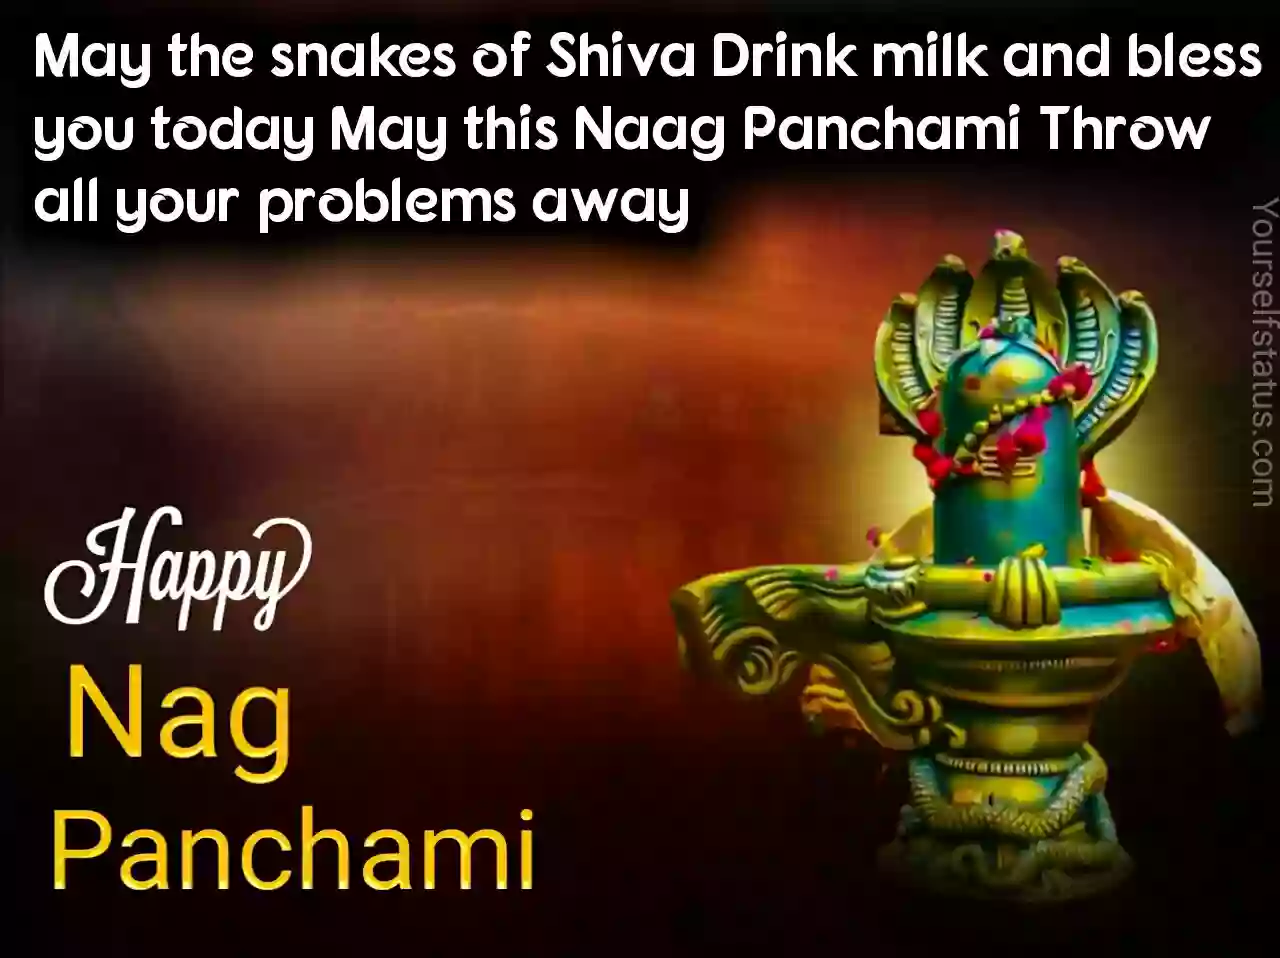 Happy Nag panchami wishes in English